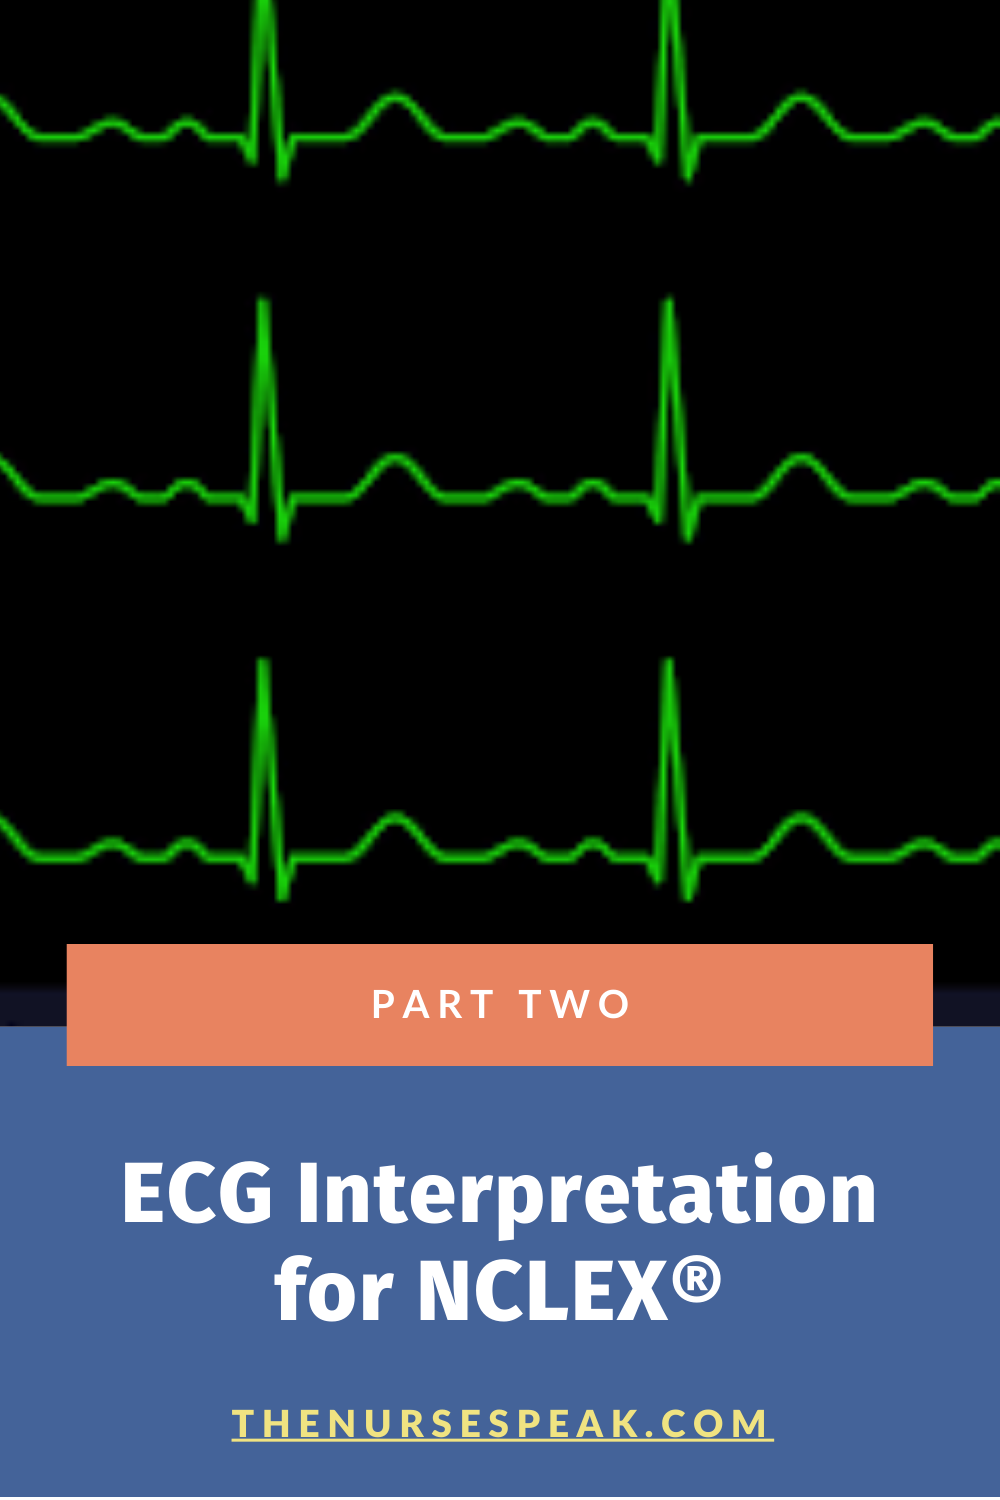 ECG INTERPRETATION FOR NCLEX: PART TWO